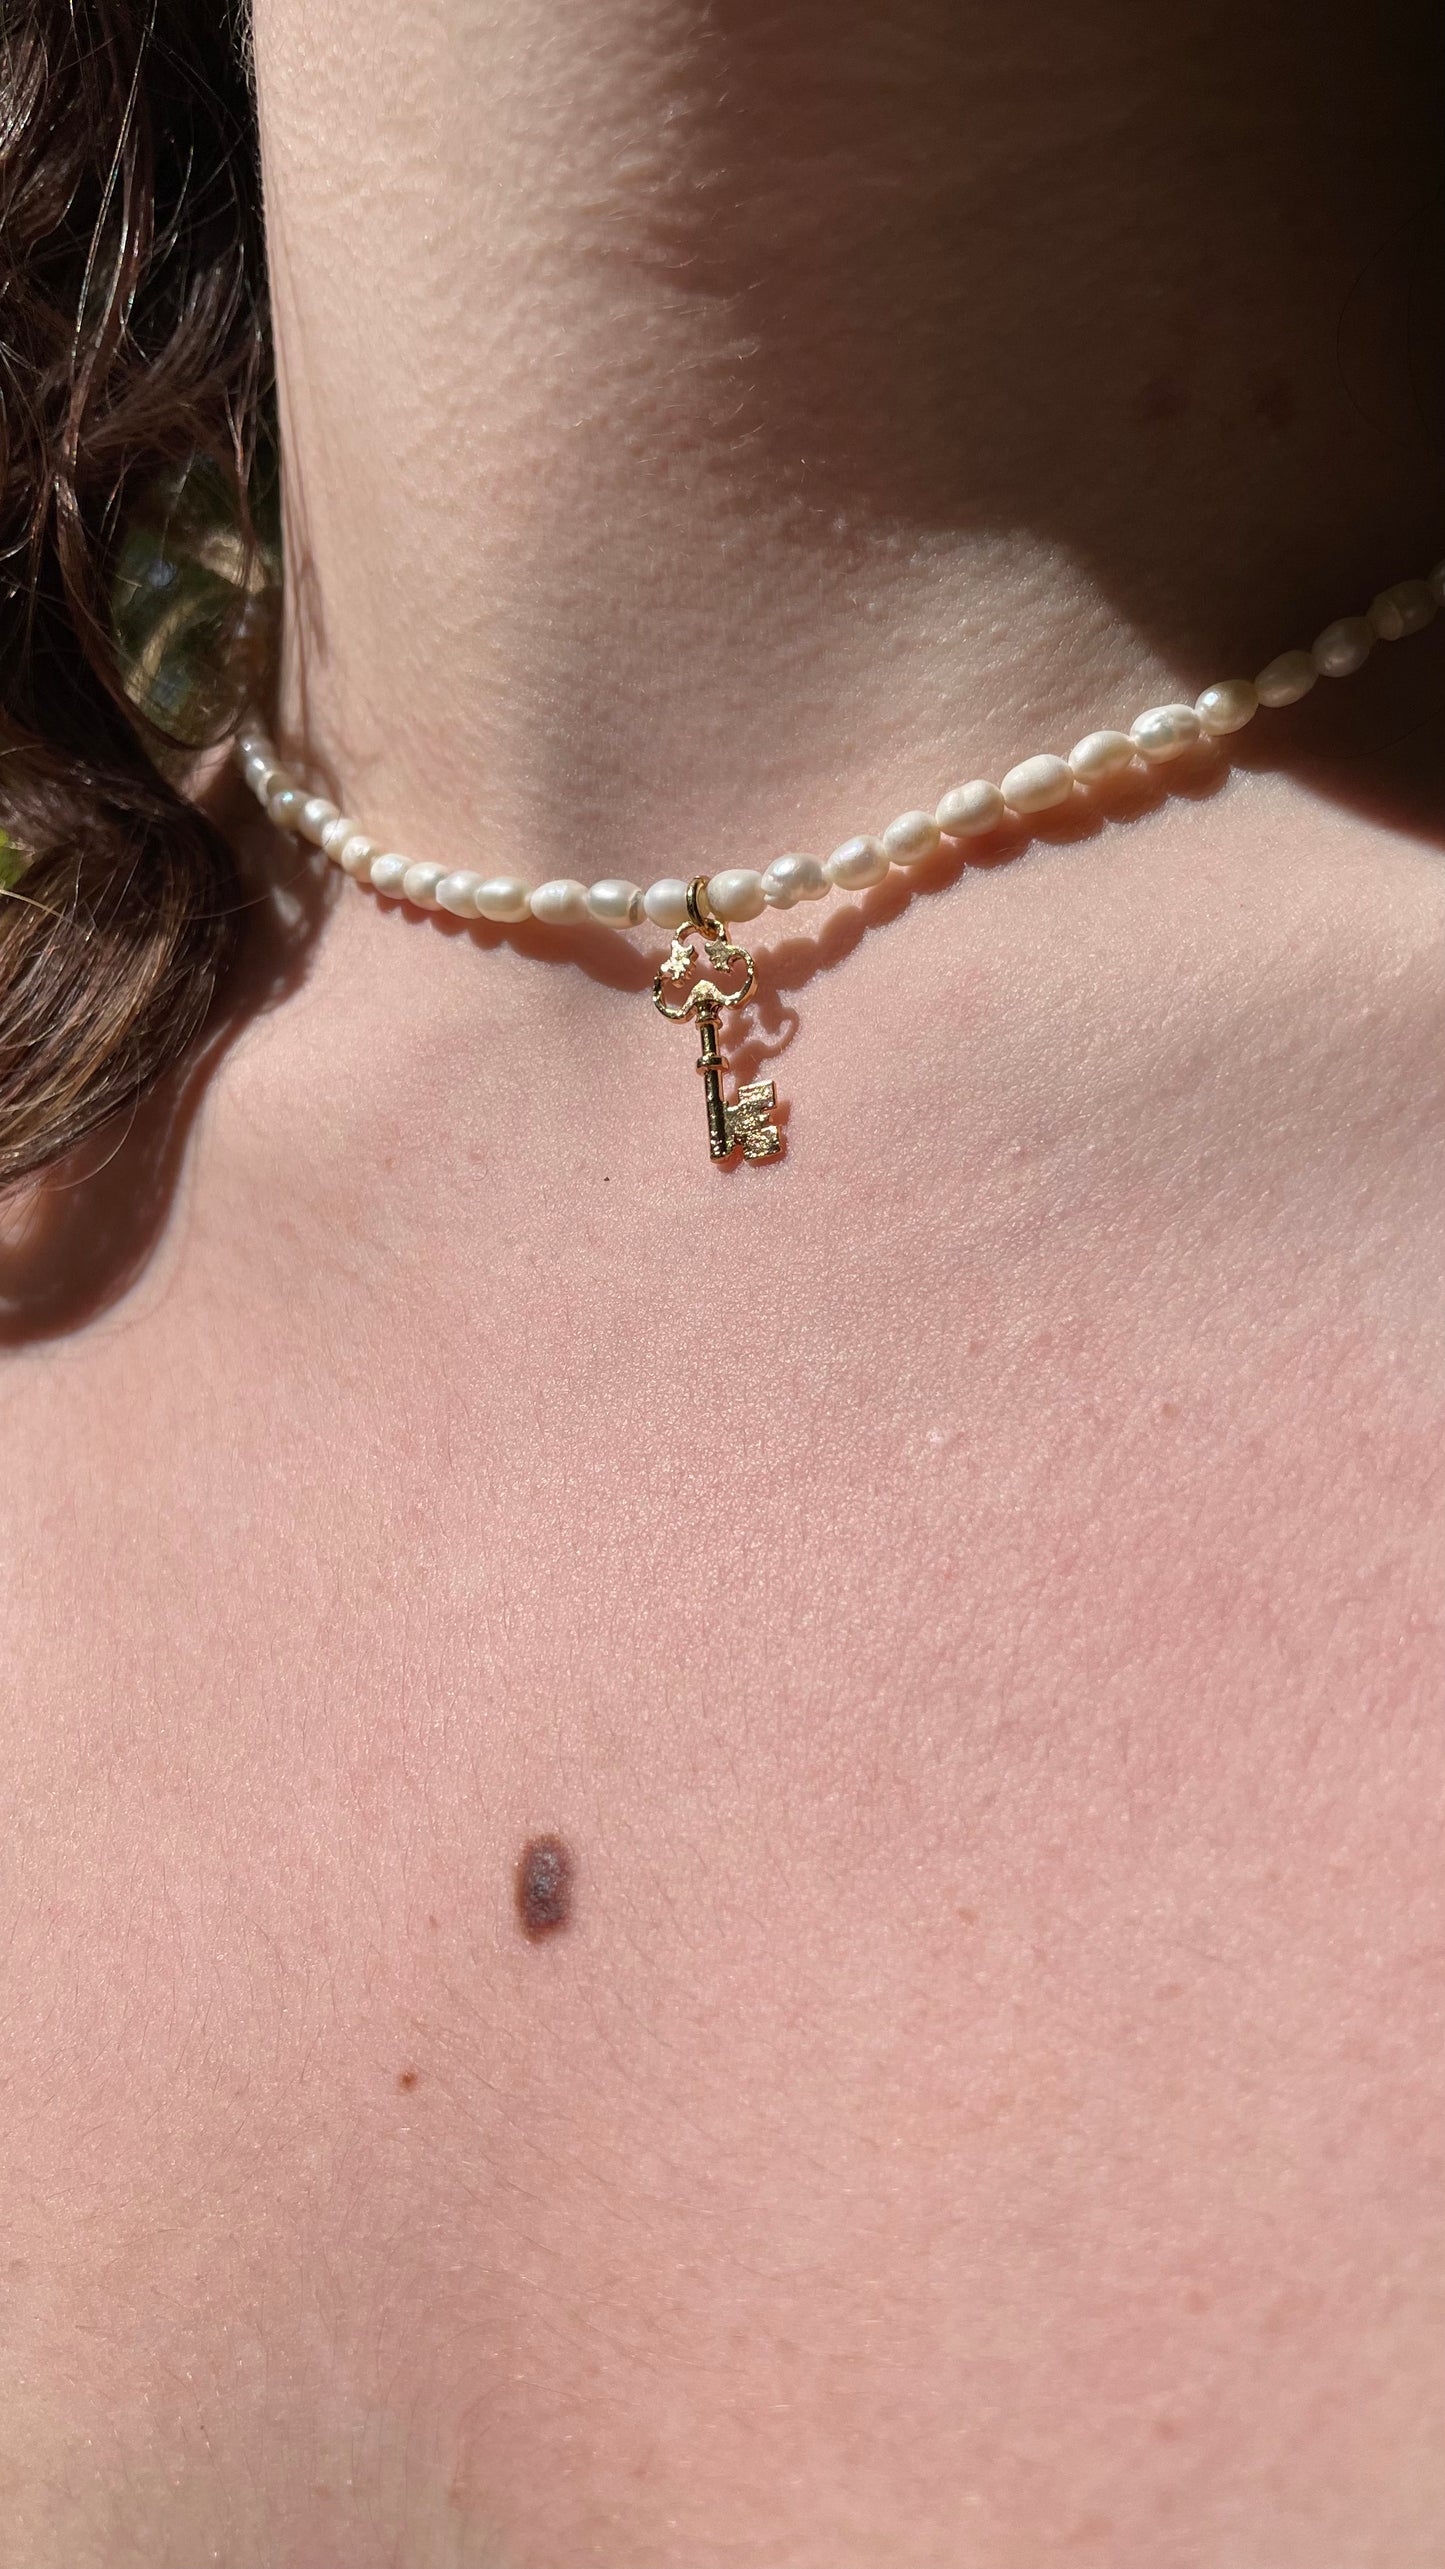 Mini pearl key necklace